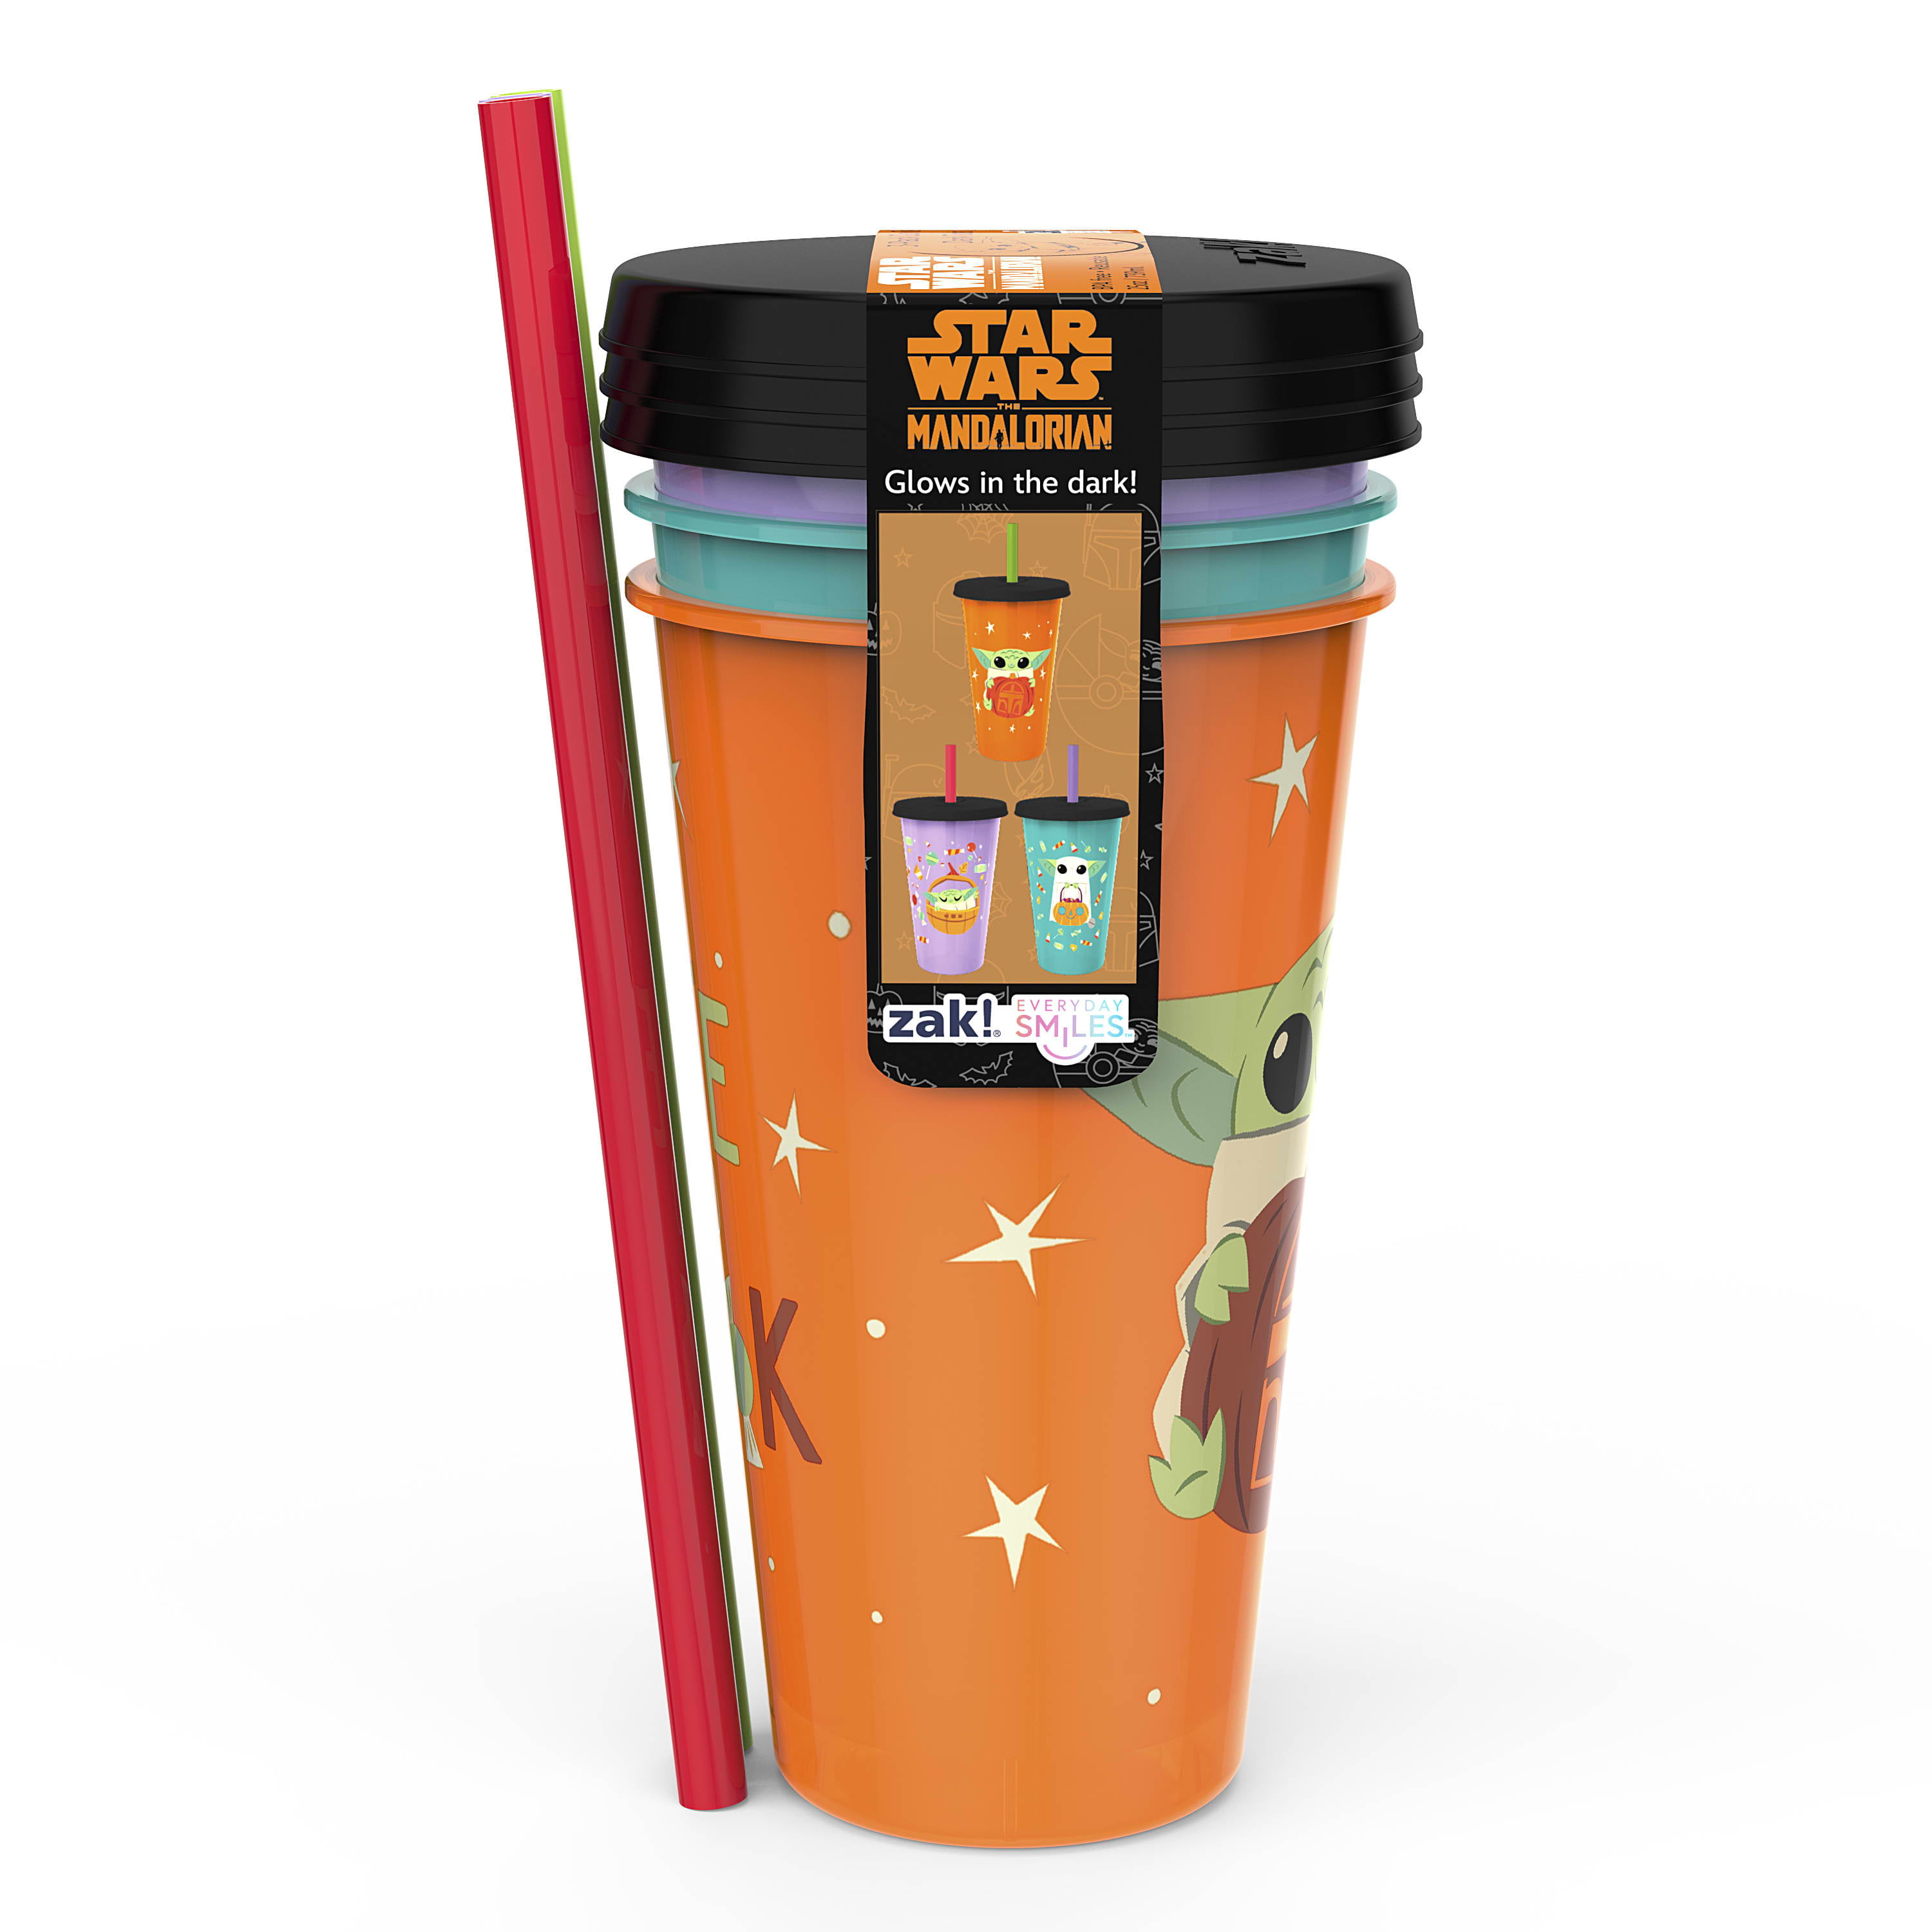 BABY YODA Mandalorian STAR WARS Plastic Drinking Cup Tumbler 1 Cup NEW RARE!